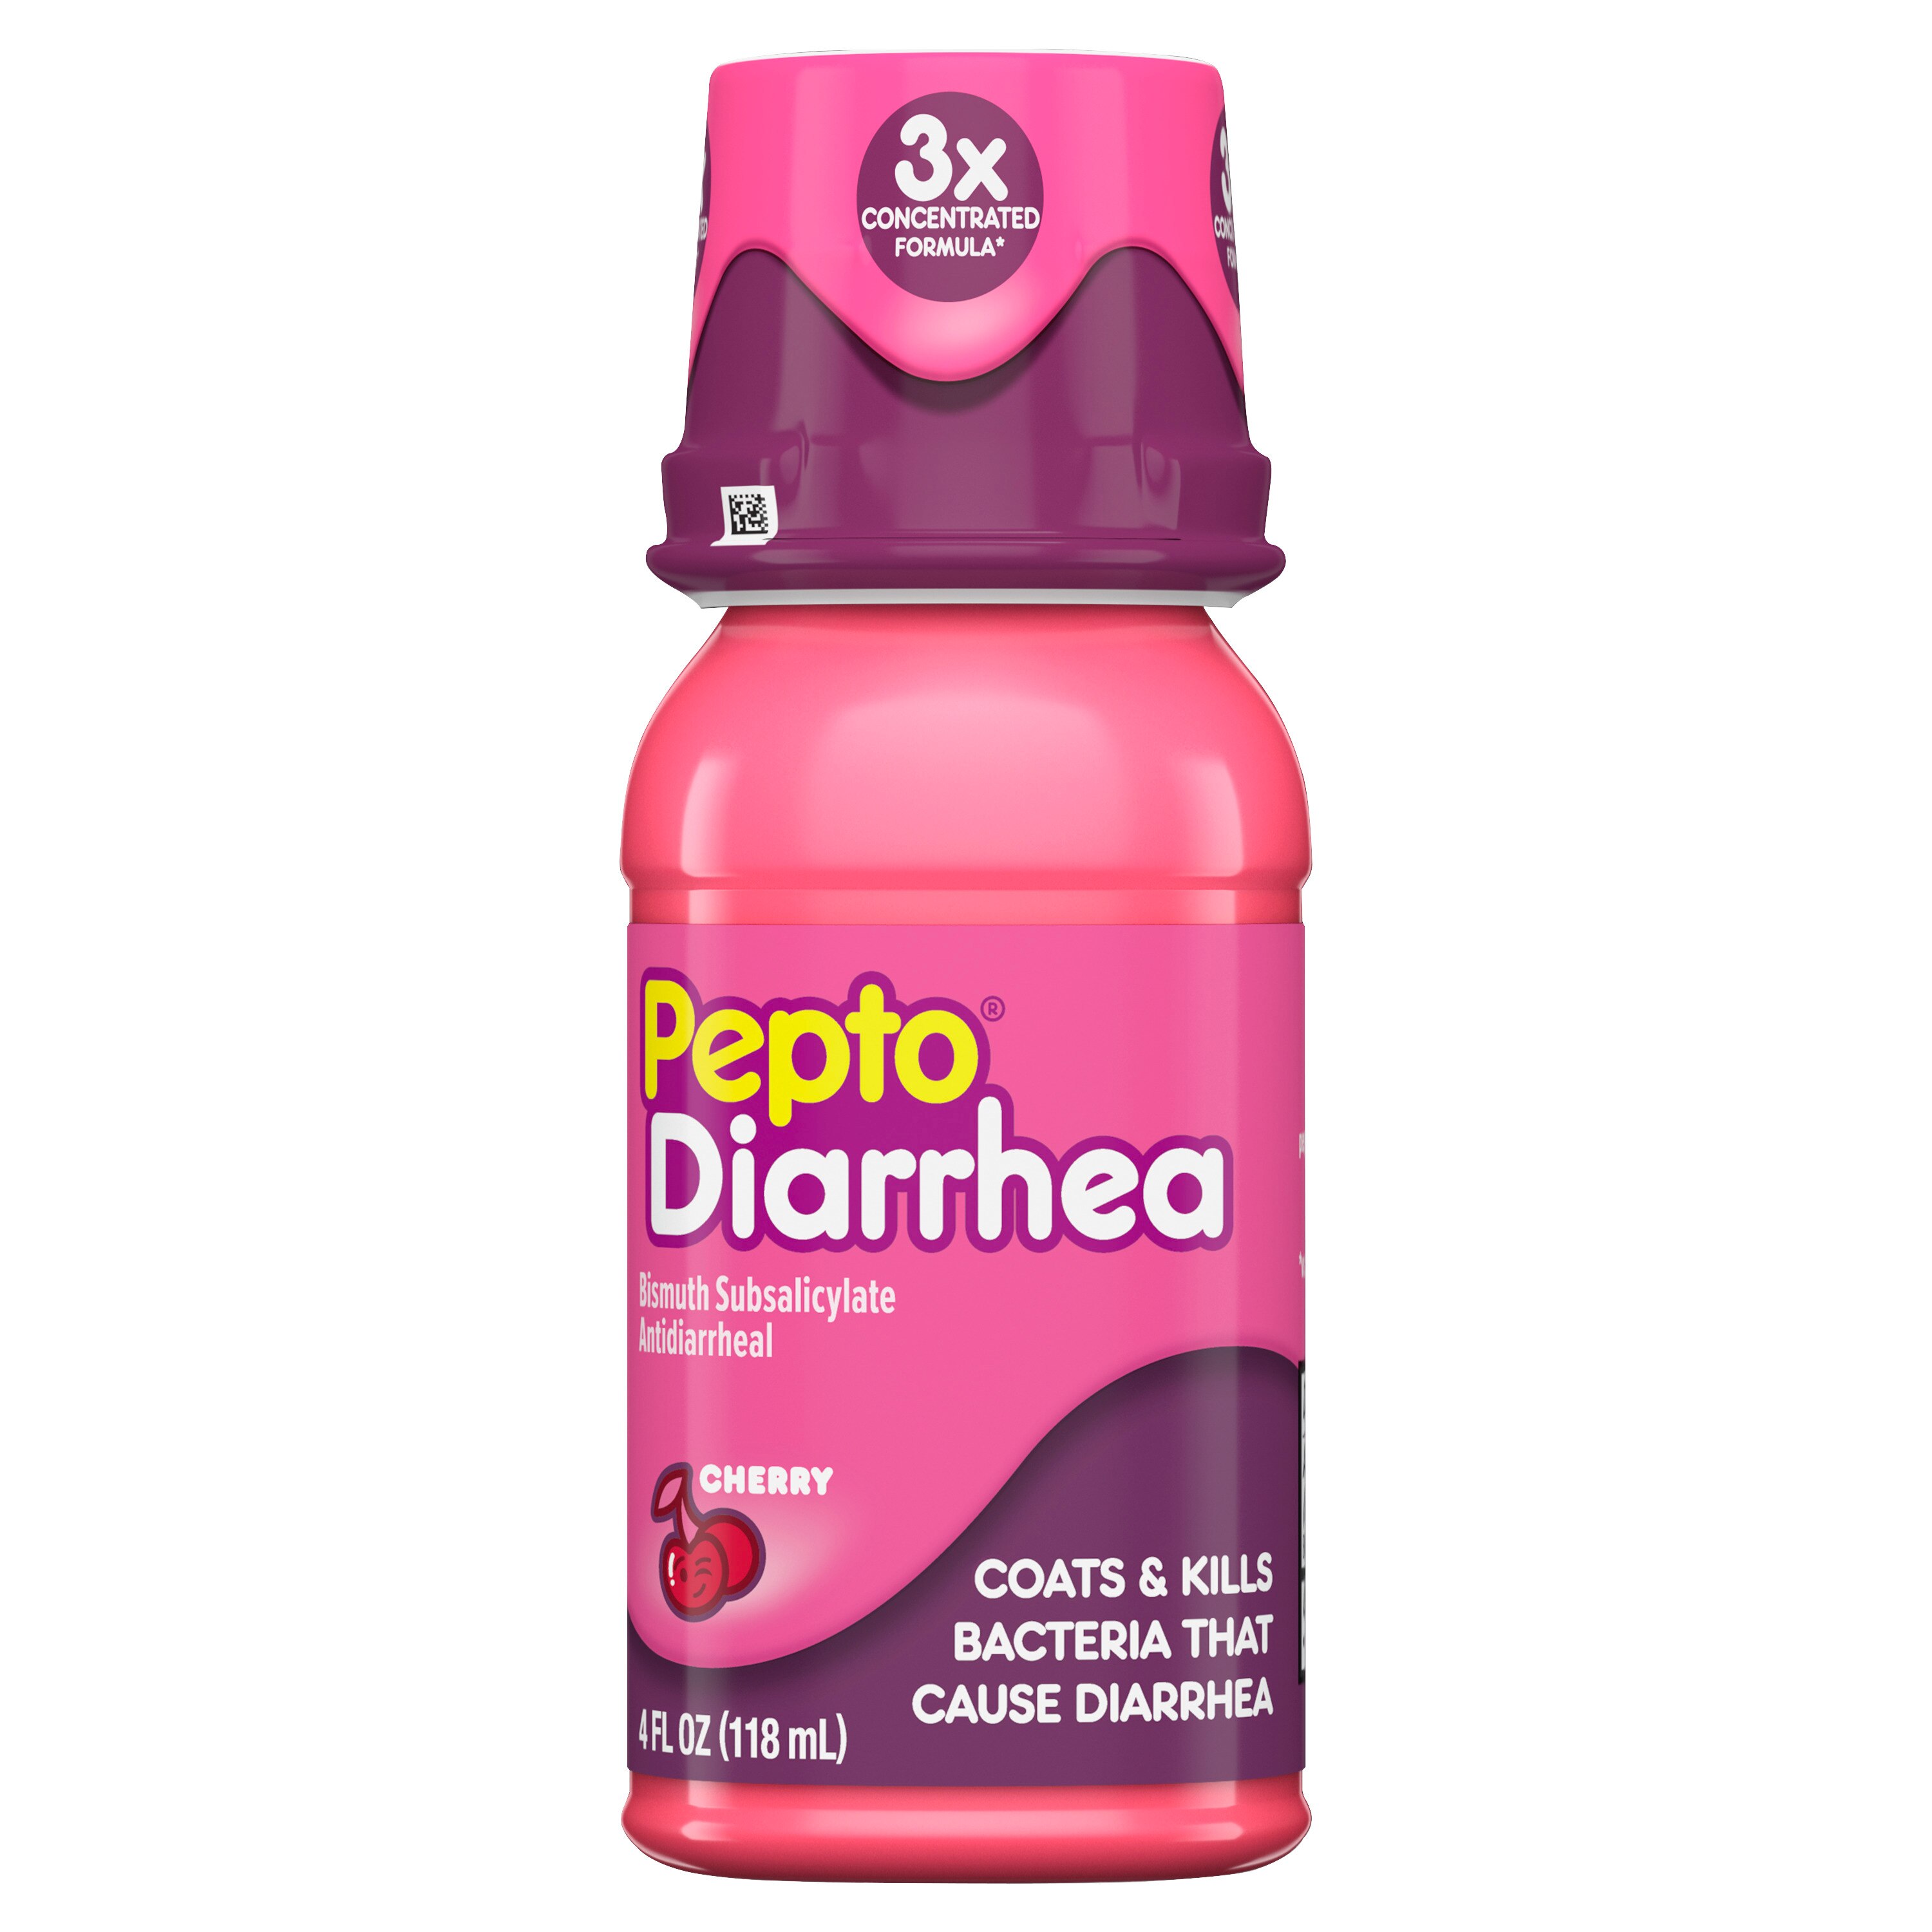 Pepto Bismol Diarrhea Liquid, Anti Diarrhea Medicine for Fast and Effective Diarrhea Relief, 4 oz